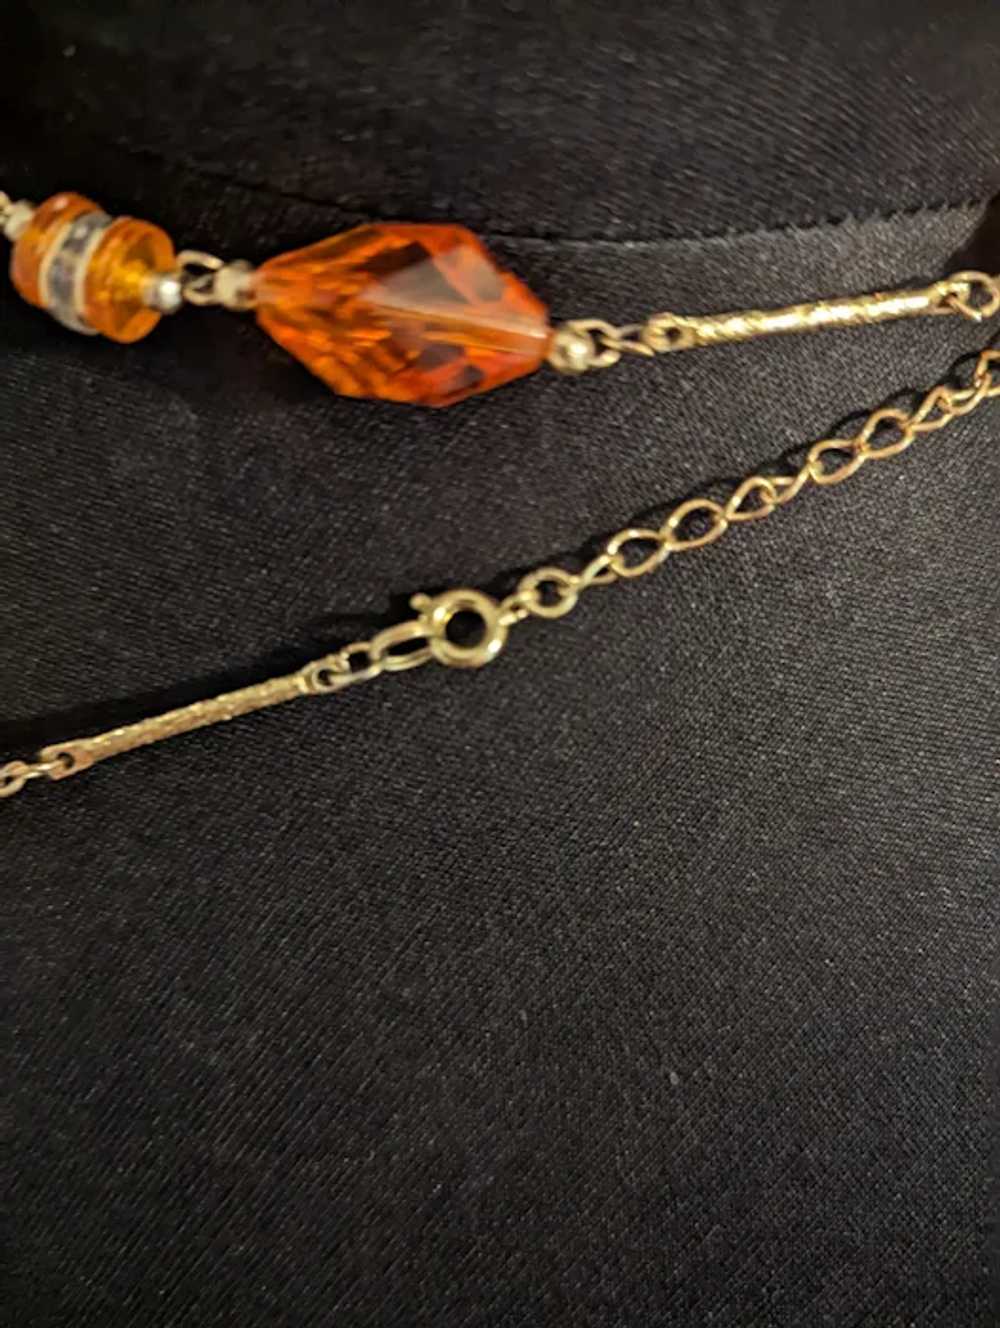 Translucent Orange Lucite Beads Necklace - image 2